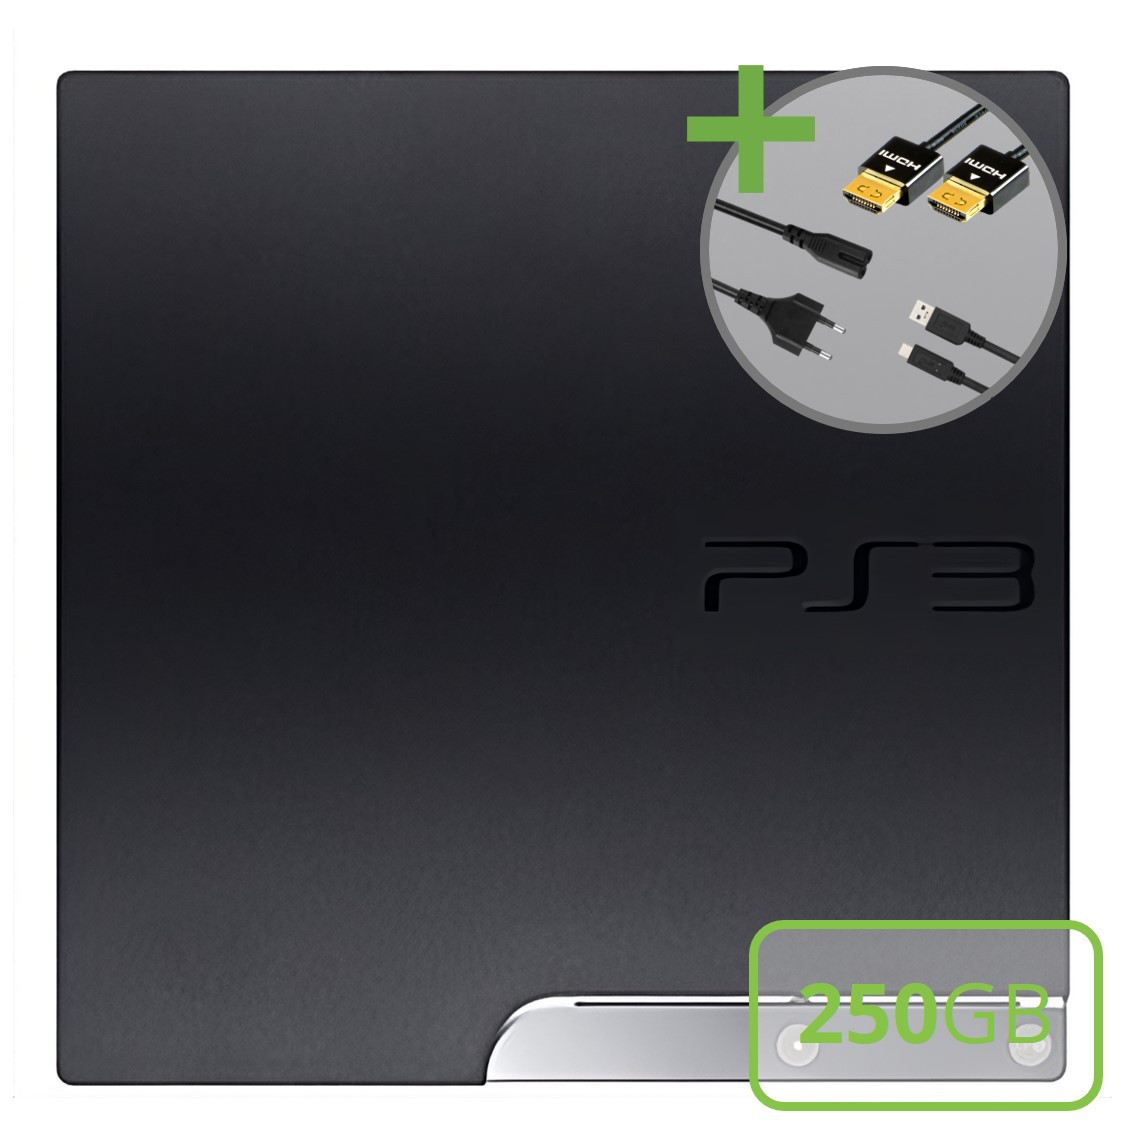 Sony PlayStation 3 Slim (250GB) Starter Pack - DualShock Edition - Playstation 3 Hardware - 3